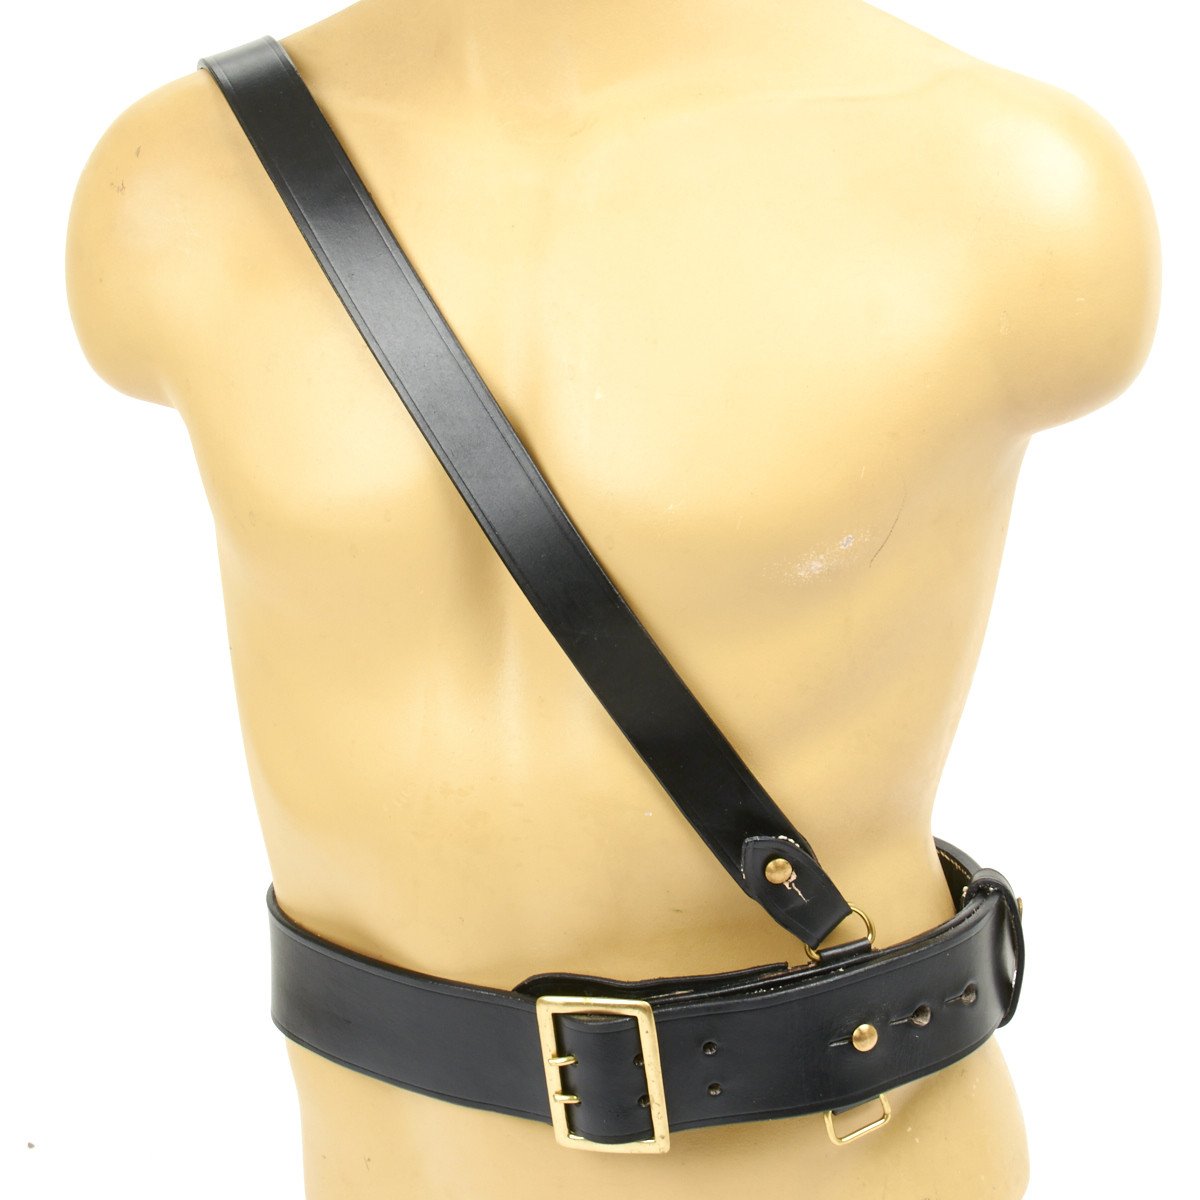  Sam Browne Belt With Shoulder Strap - Dark Brown (90